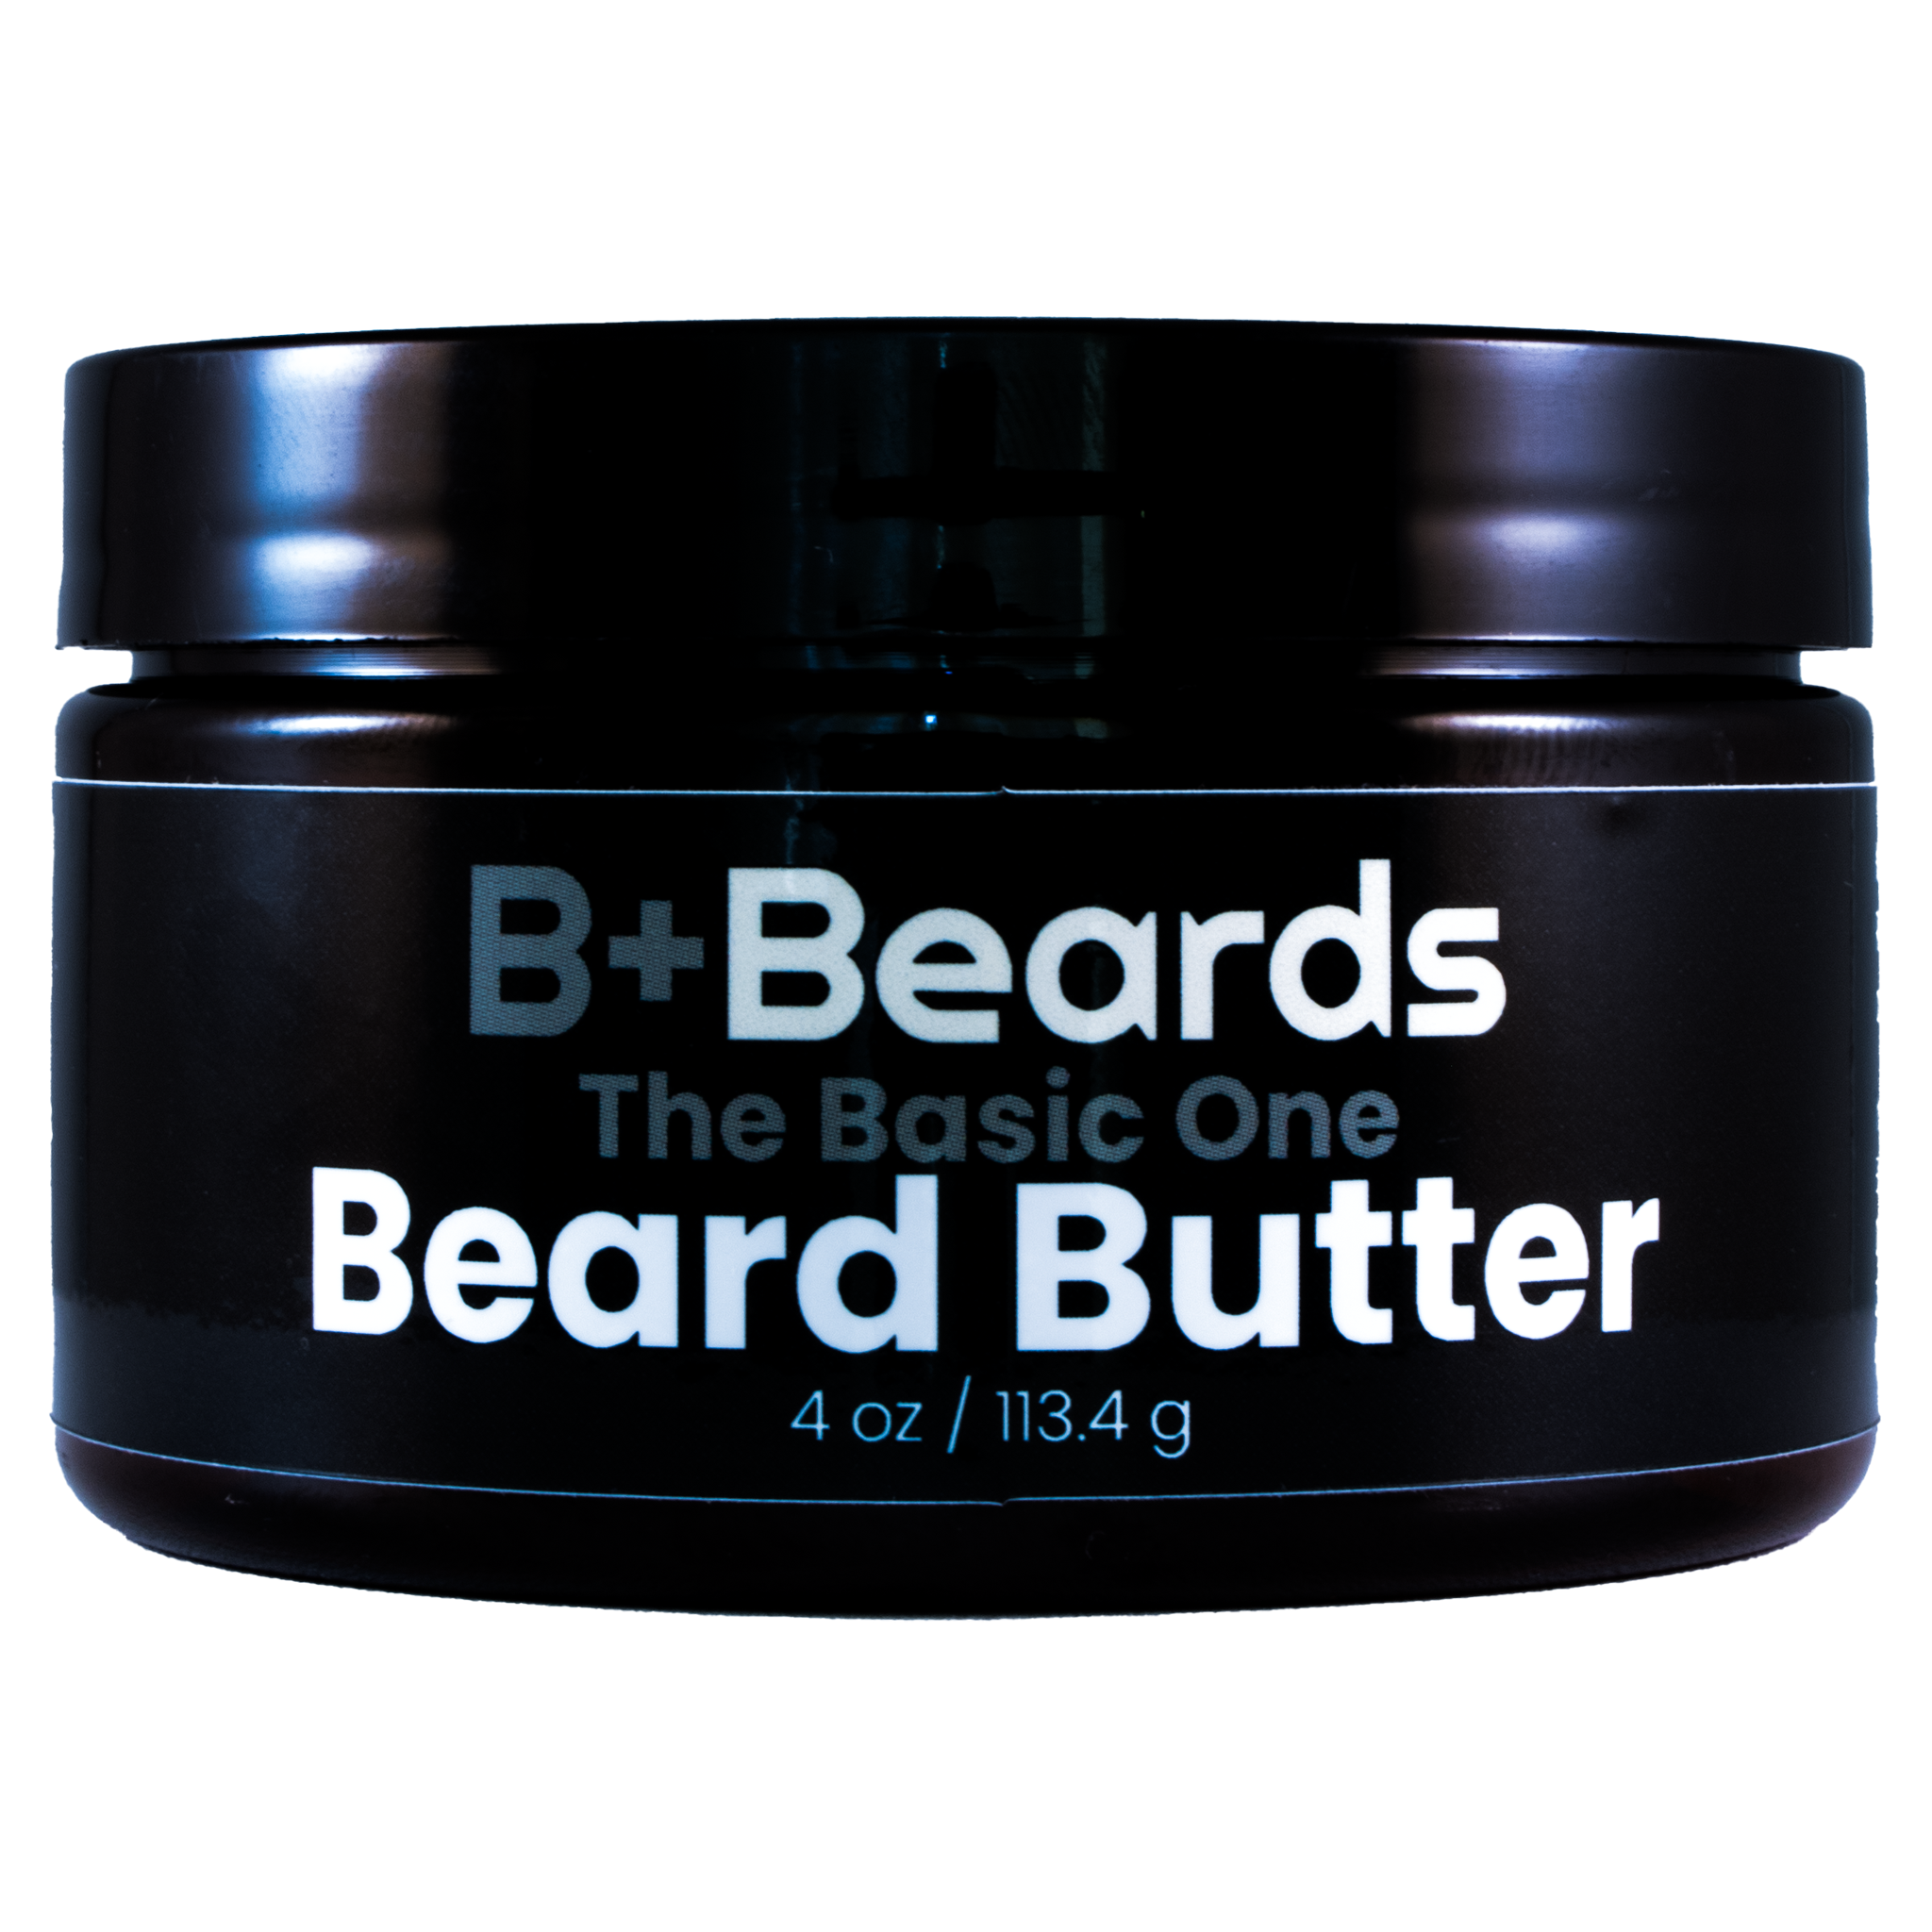 The Basic One Beard Butter